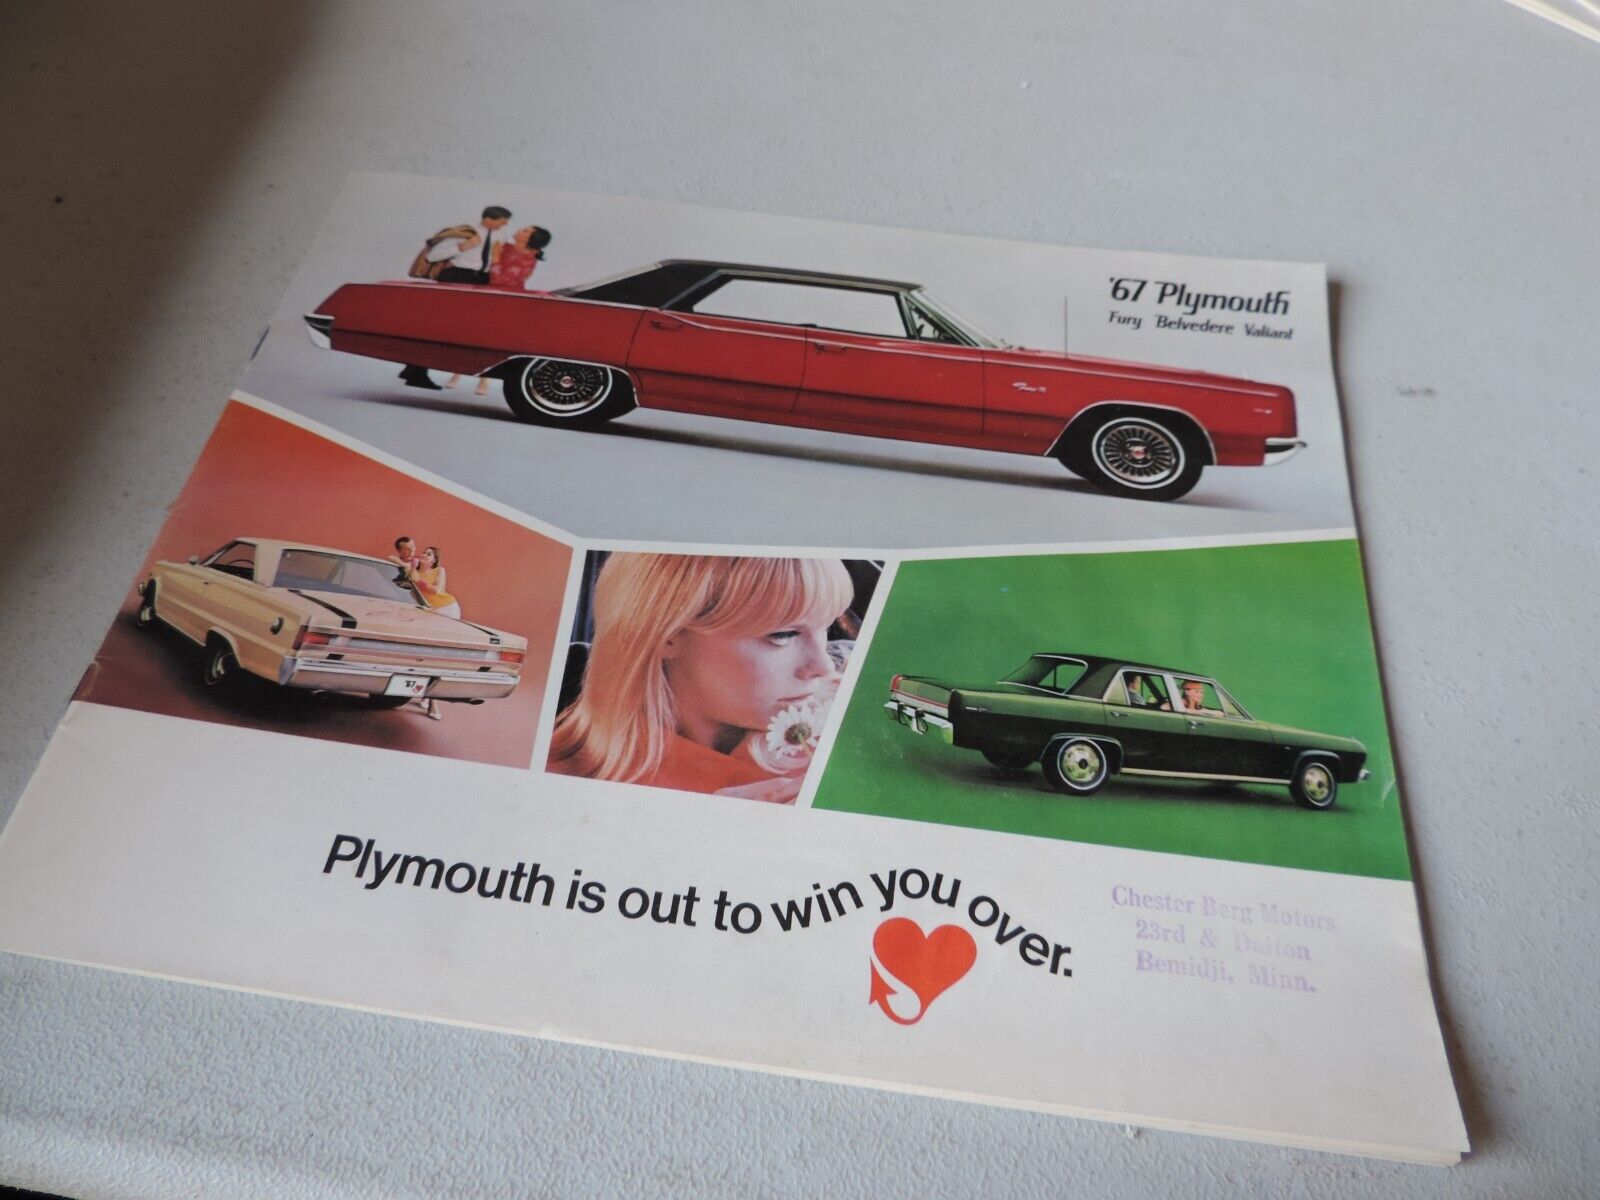 1967 Plymouth Fury, Belvidere, Valiant Sales Brochure